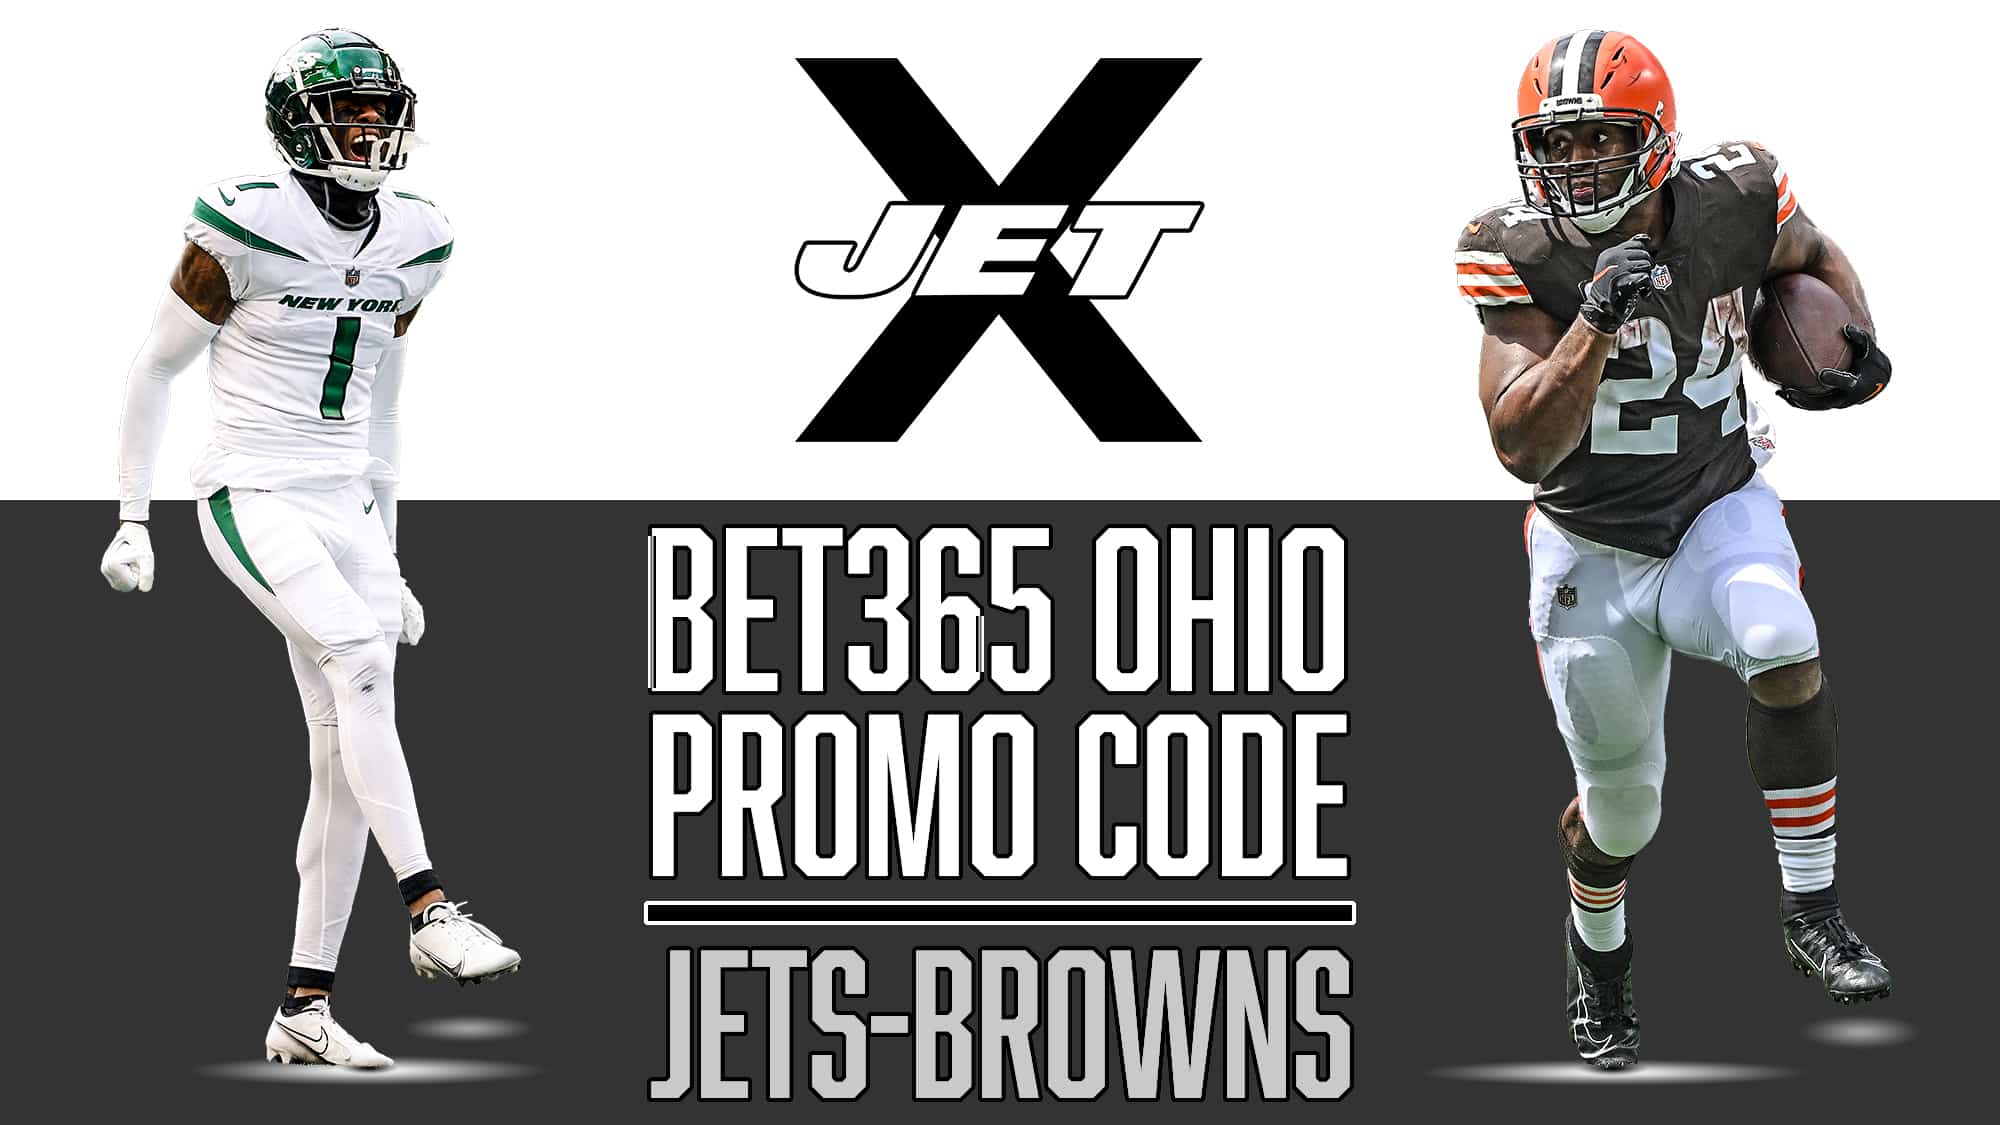 bet365 Ohio Promo Code, New York Jets at Cleveland Browns, Sauce Gardner, Nick Chubb